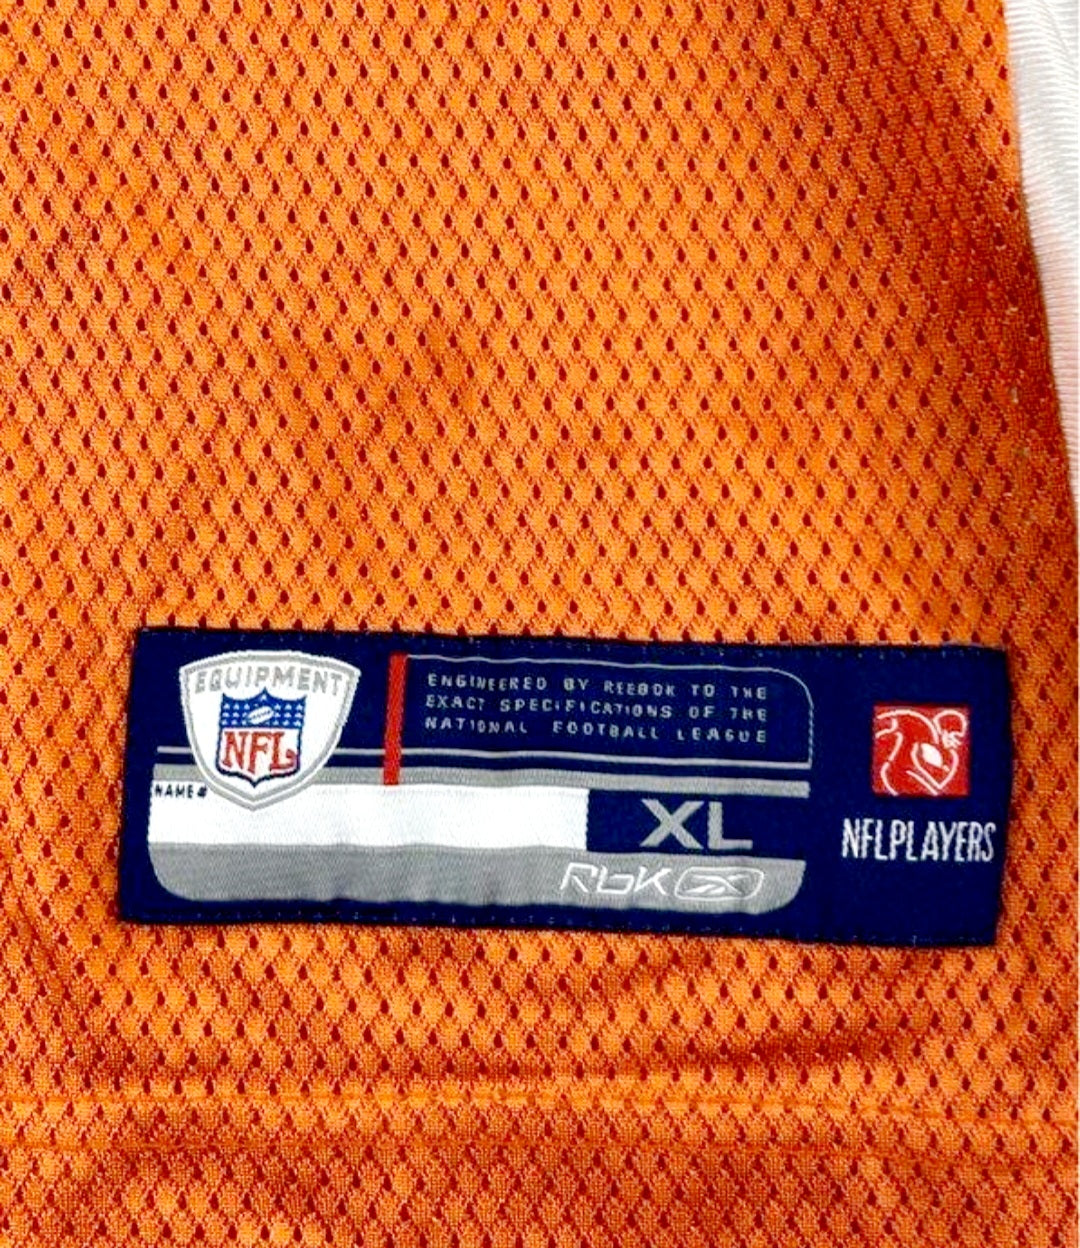 NFL *Reebok Cincinnati Bengals 'Maualuga' #58 Orange & Black Jersey (XL)